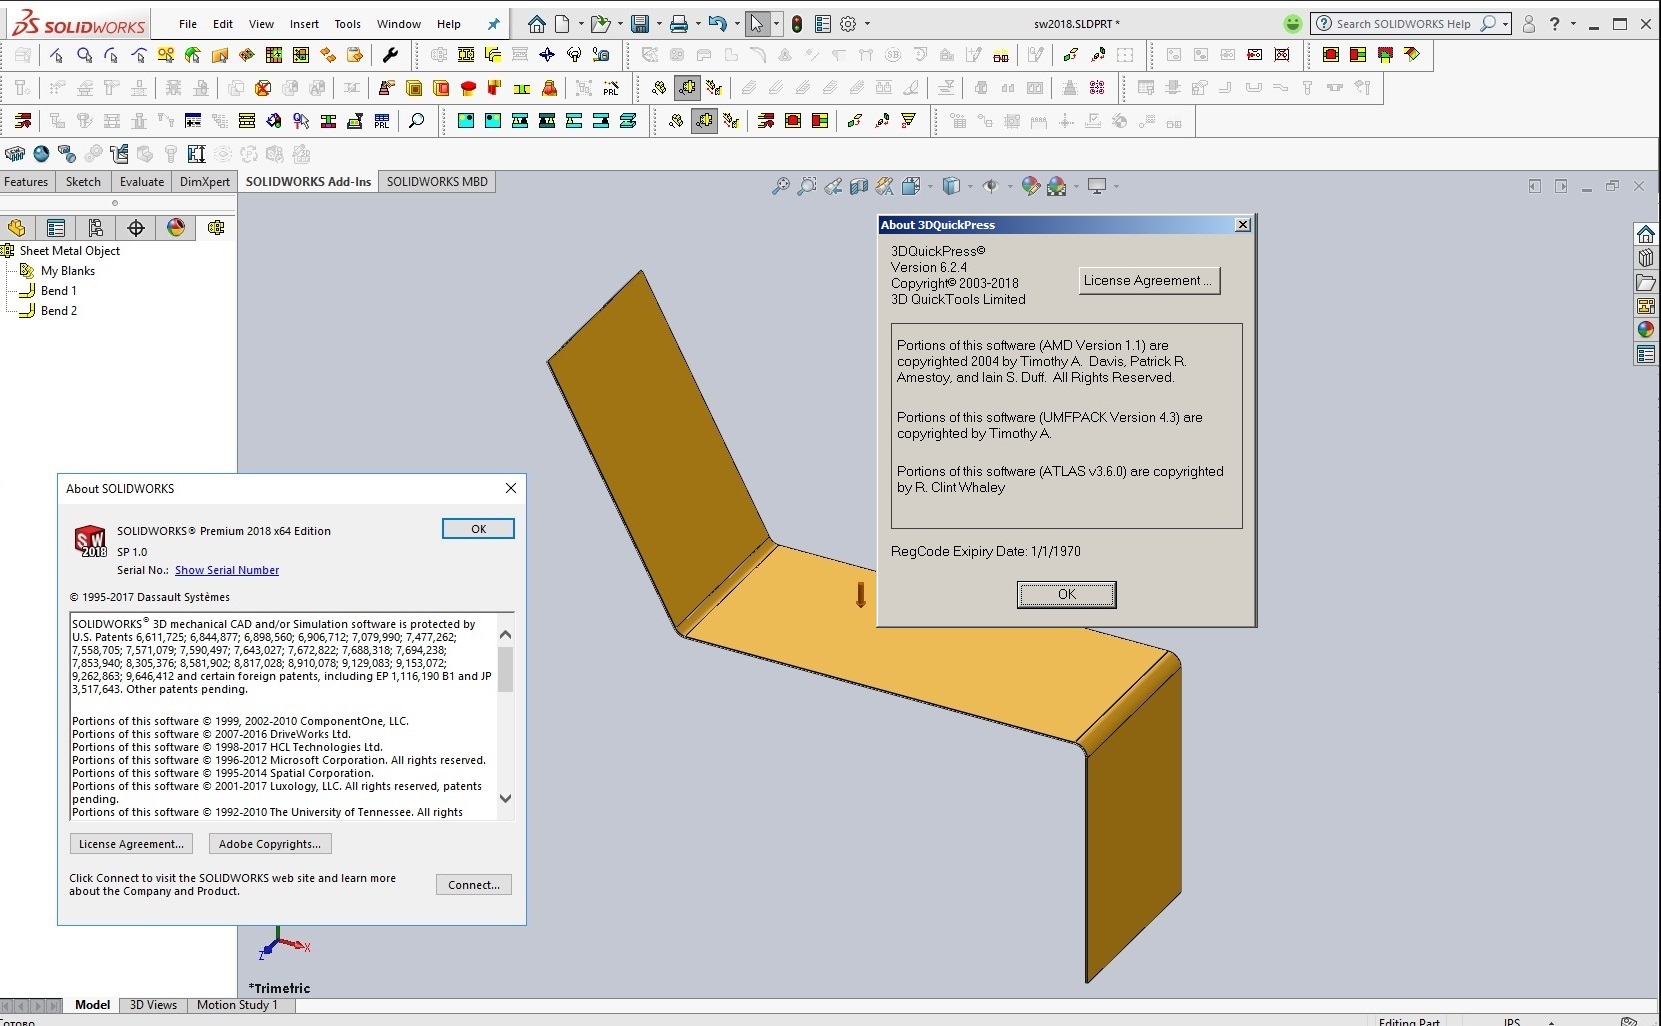 Design with 3DQuickPress v6.2.4 for SolidWorks 2011-2018 full license